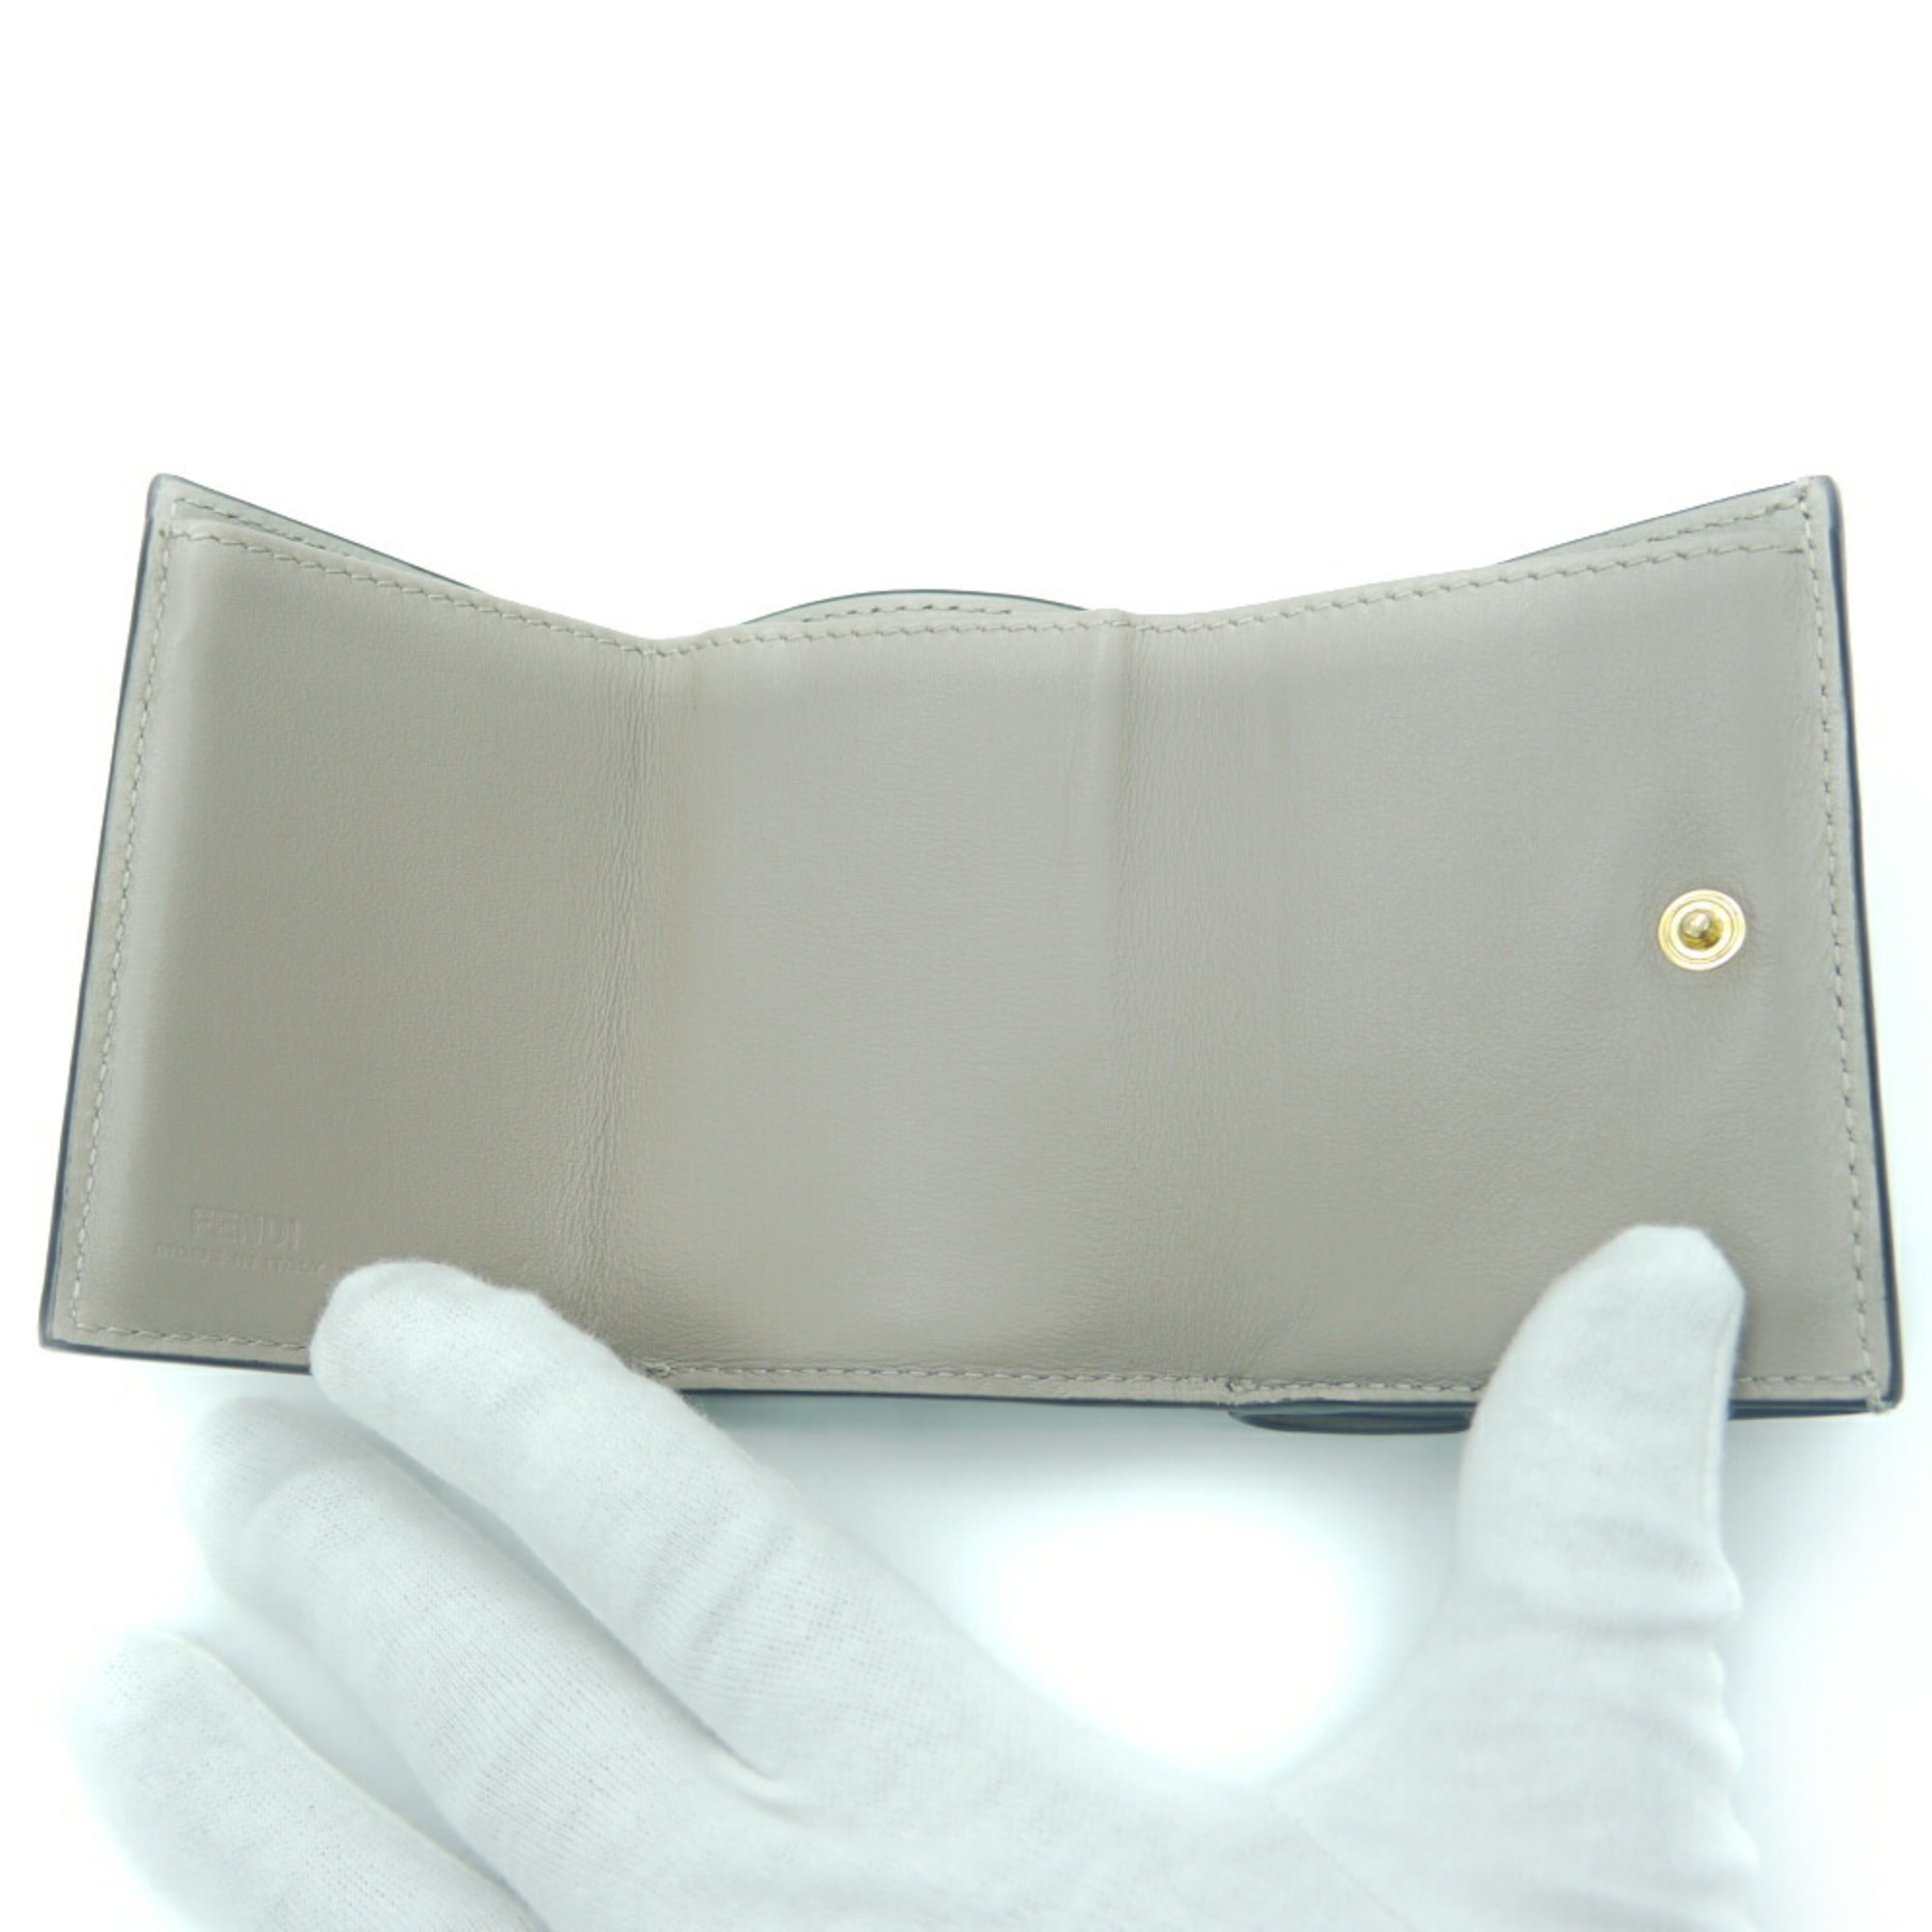 FENDI F is micro trifold wallet 8M0395 A18B F0E65